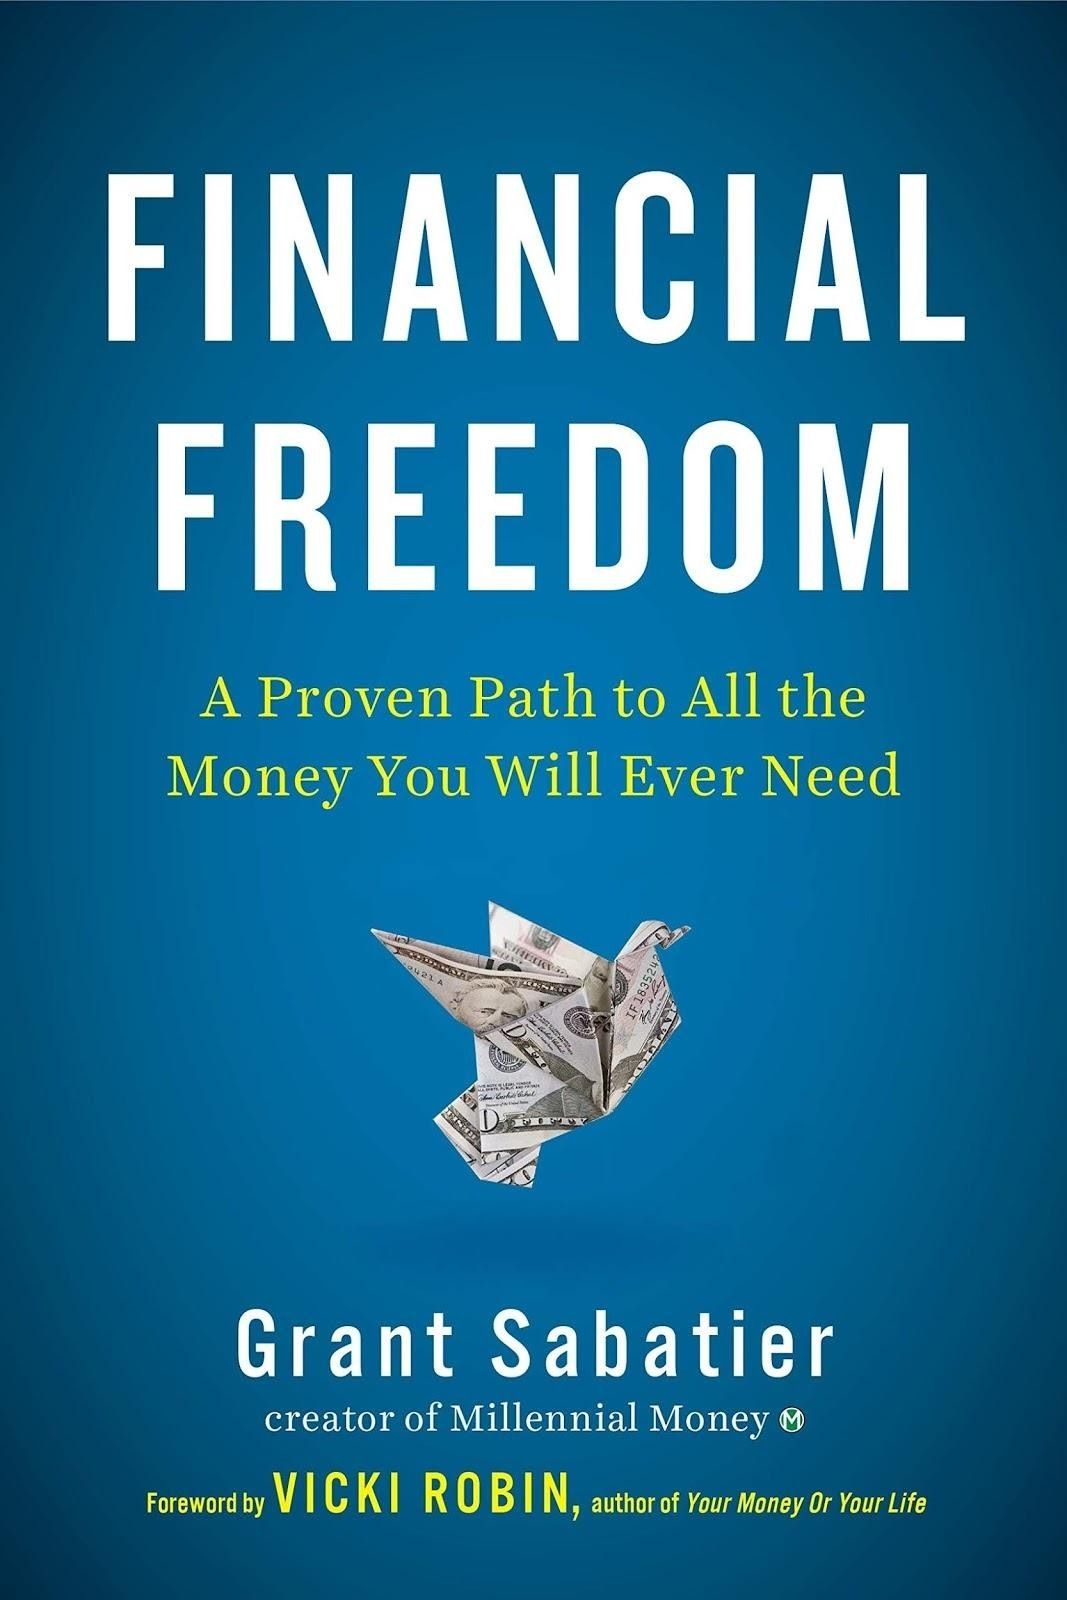 Book 'Financial Freedom'